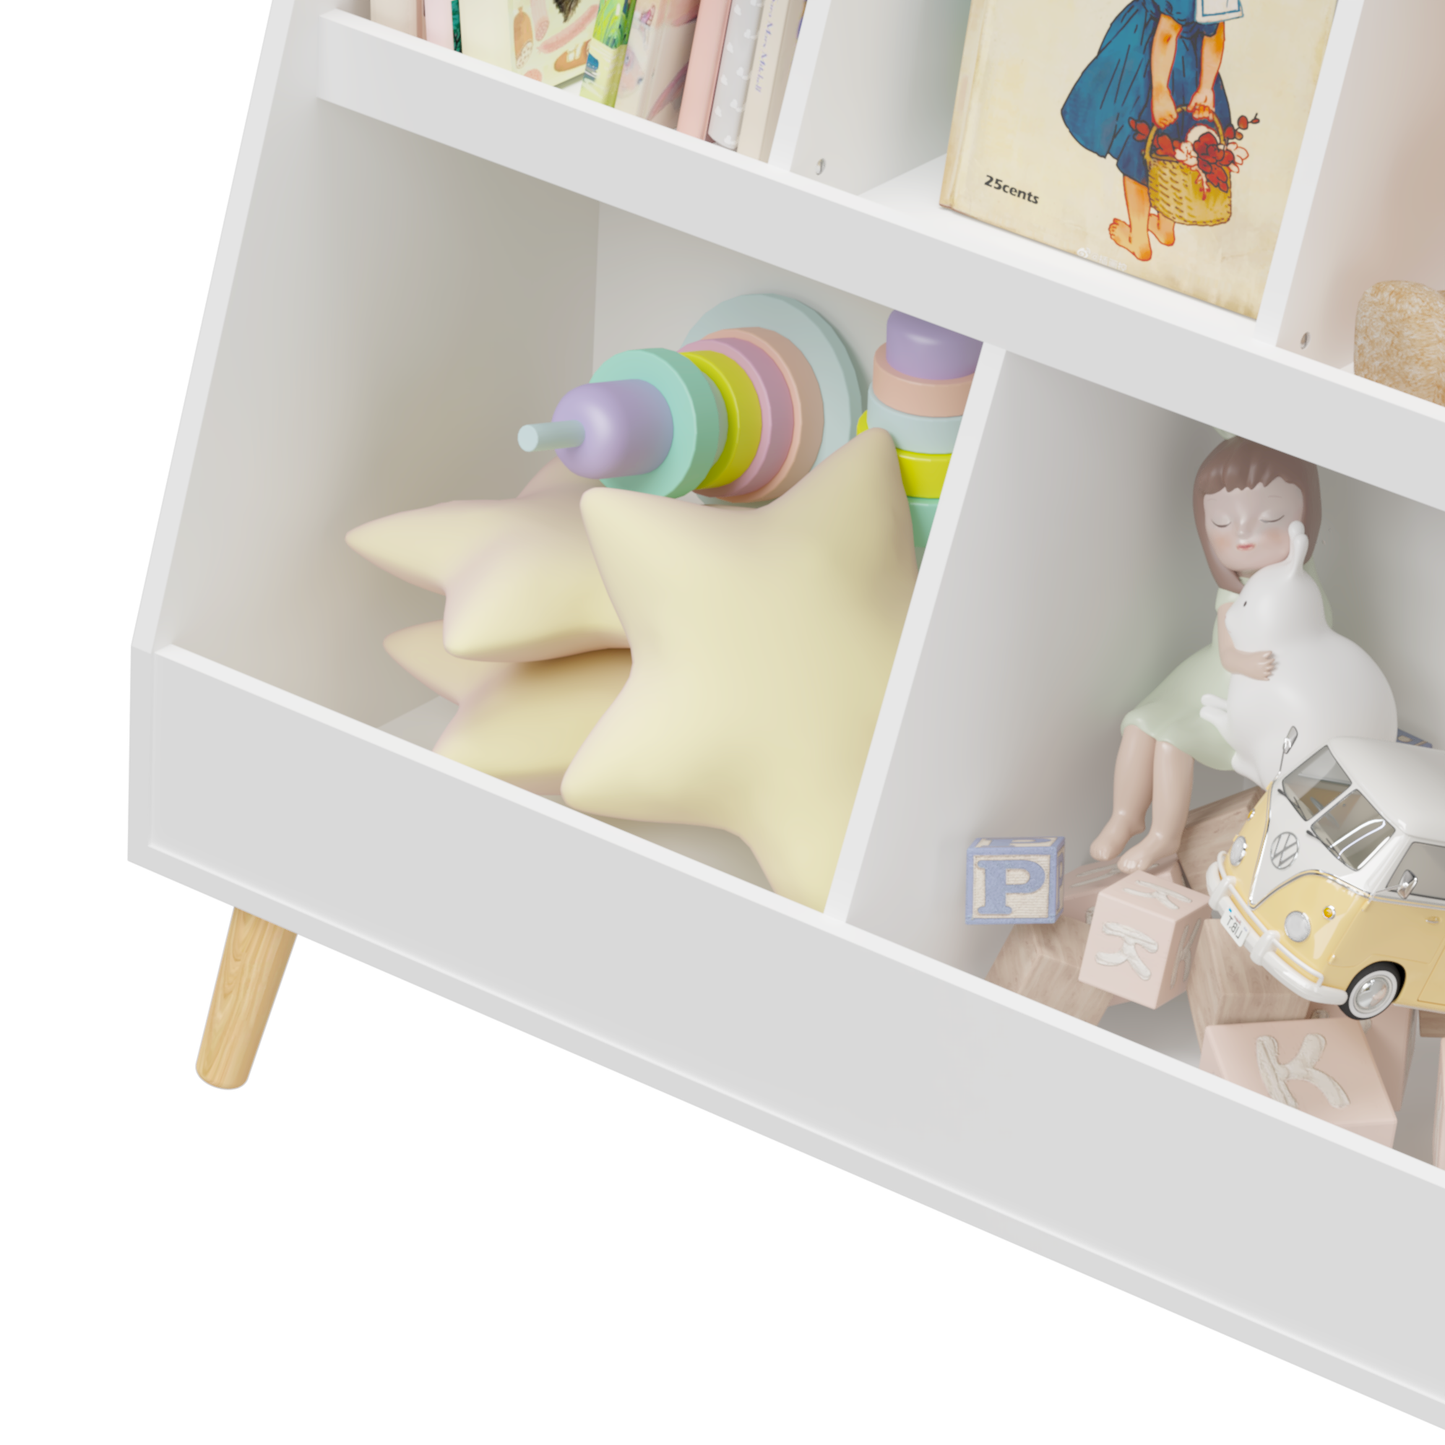 Kids Bookshelf and Toy Organizer